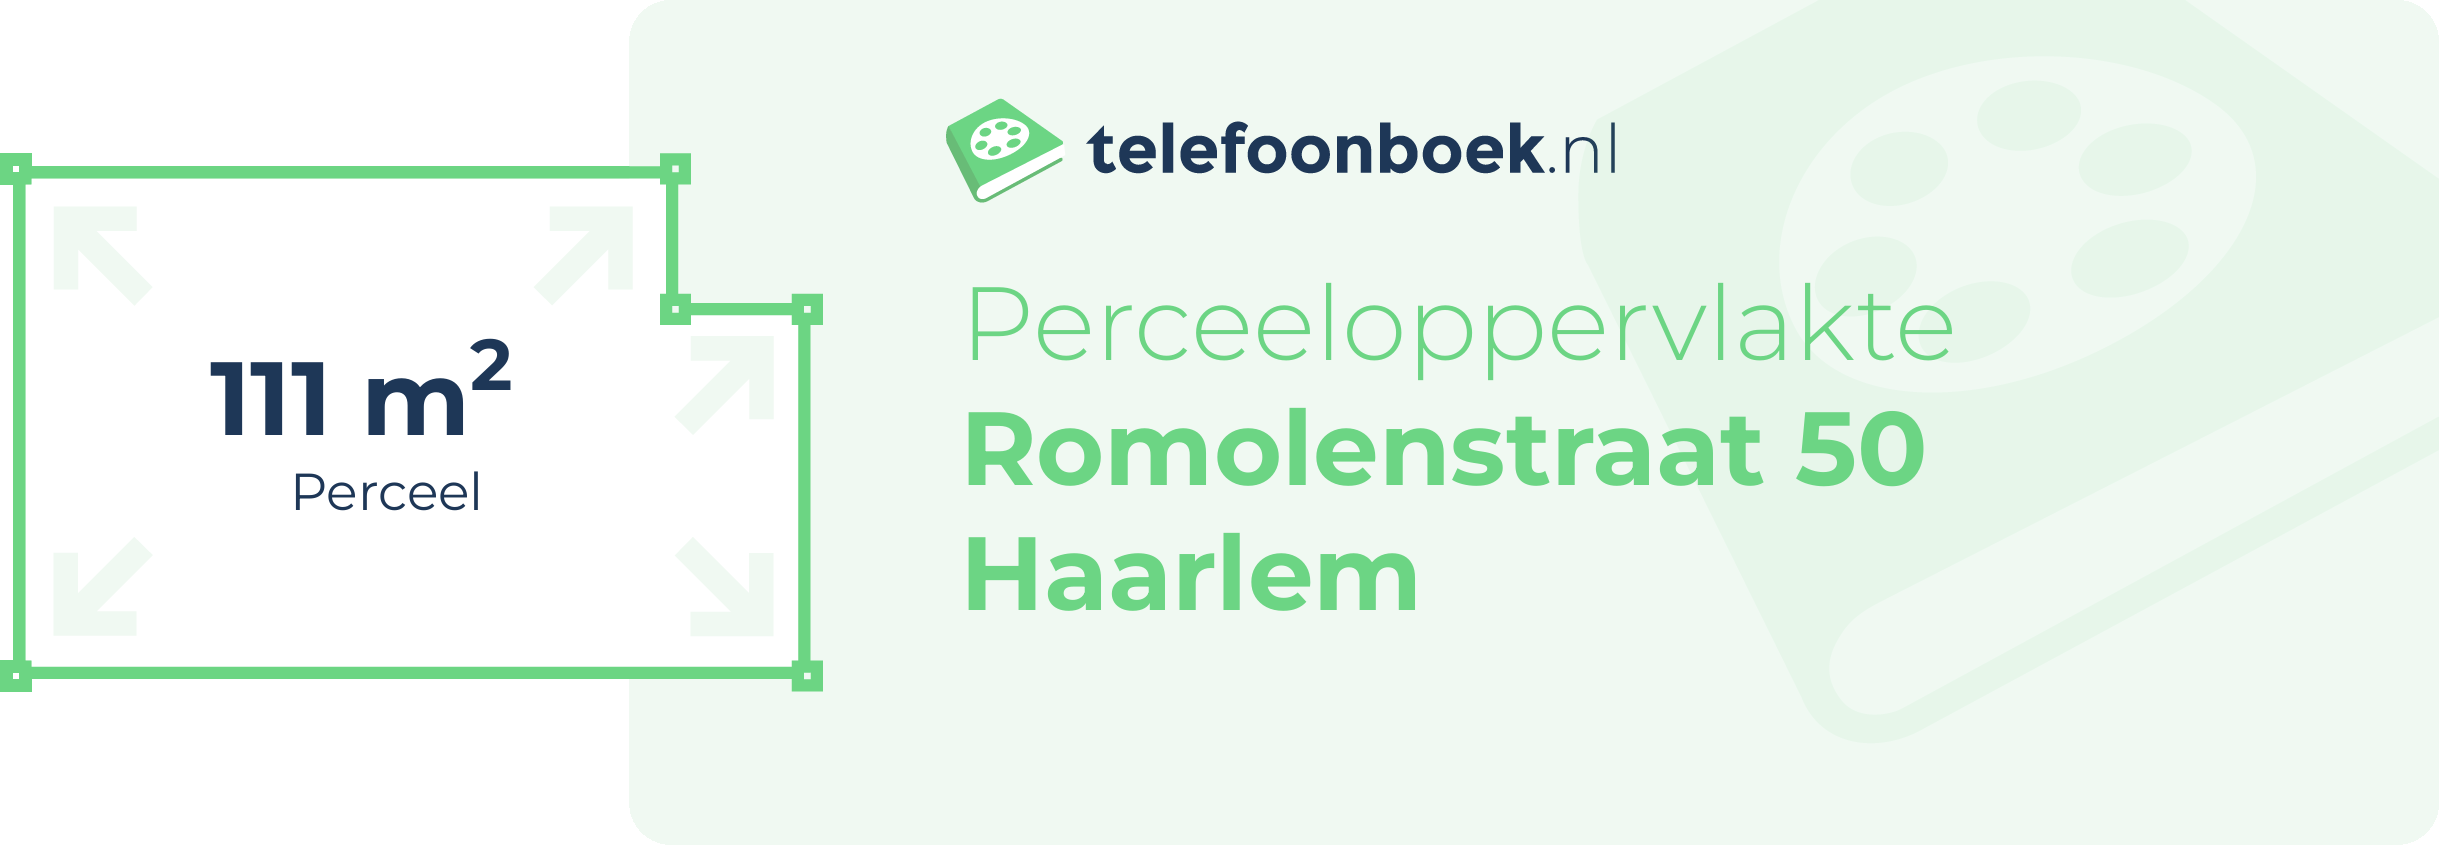 Perceeloppervlakte Romolenstraat 50 Haarlem